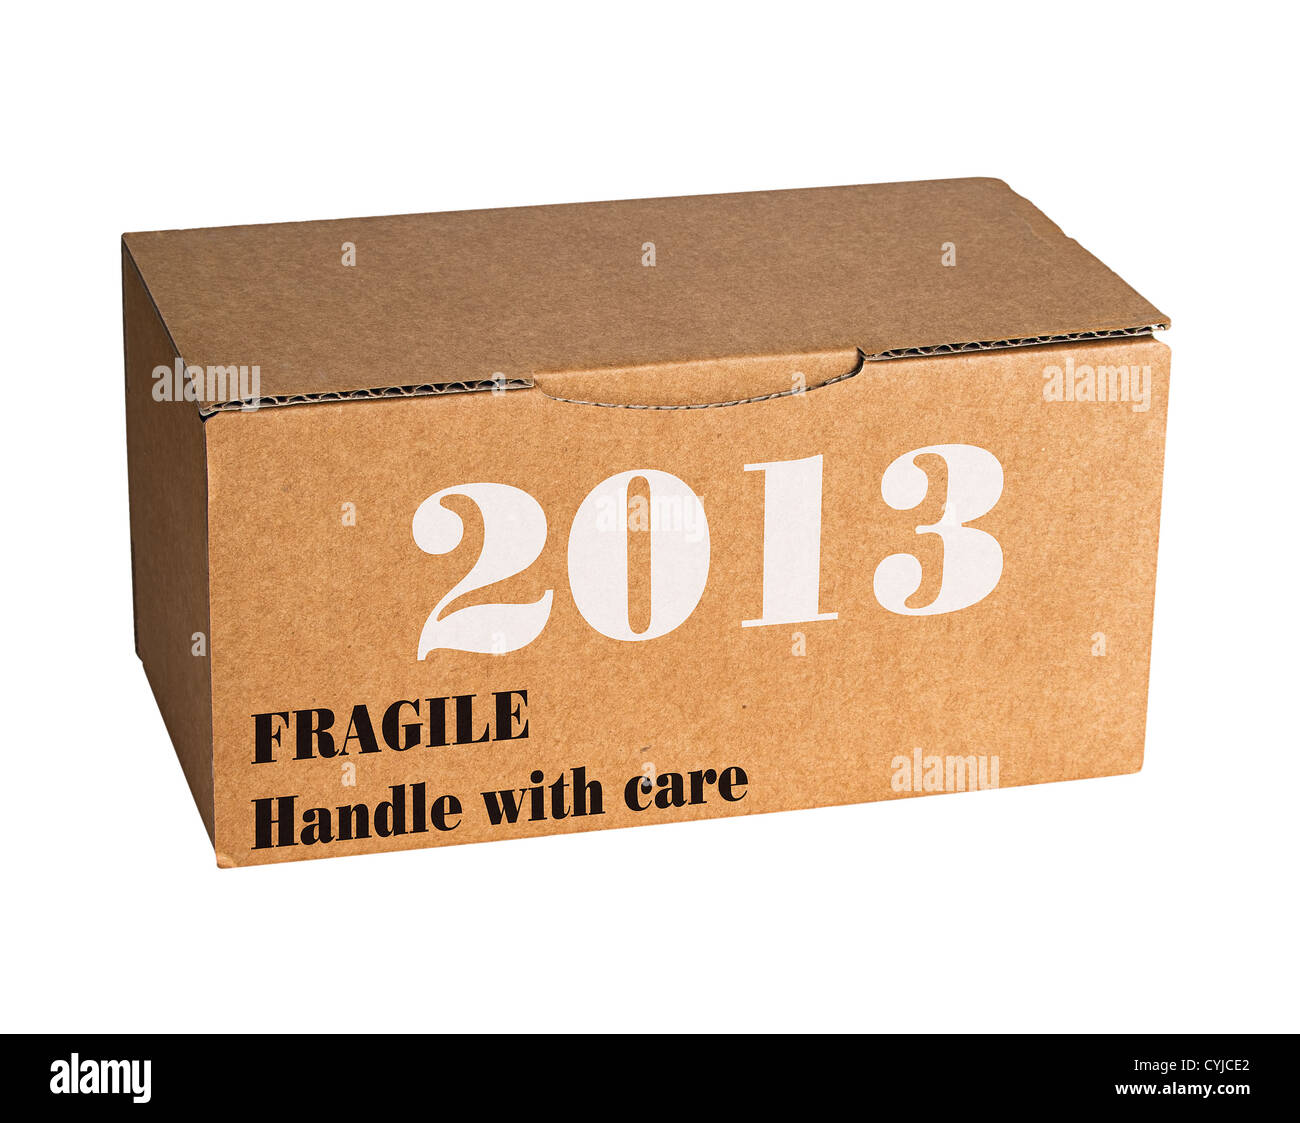 Fragile Neujahr - Griff mit Sorgfalt Stockfoto